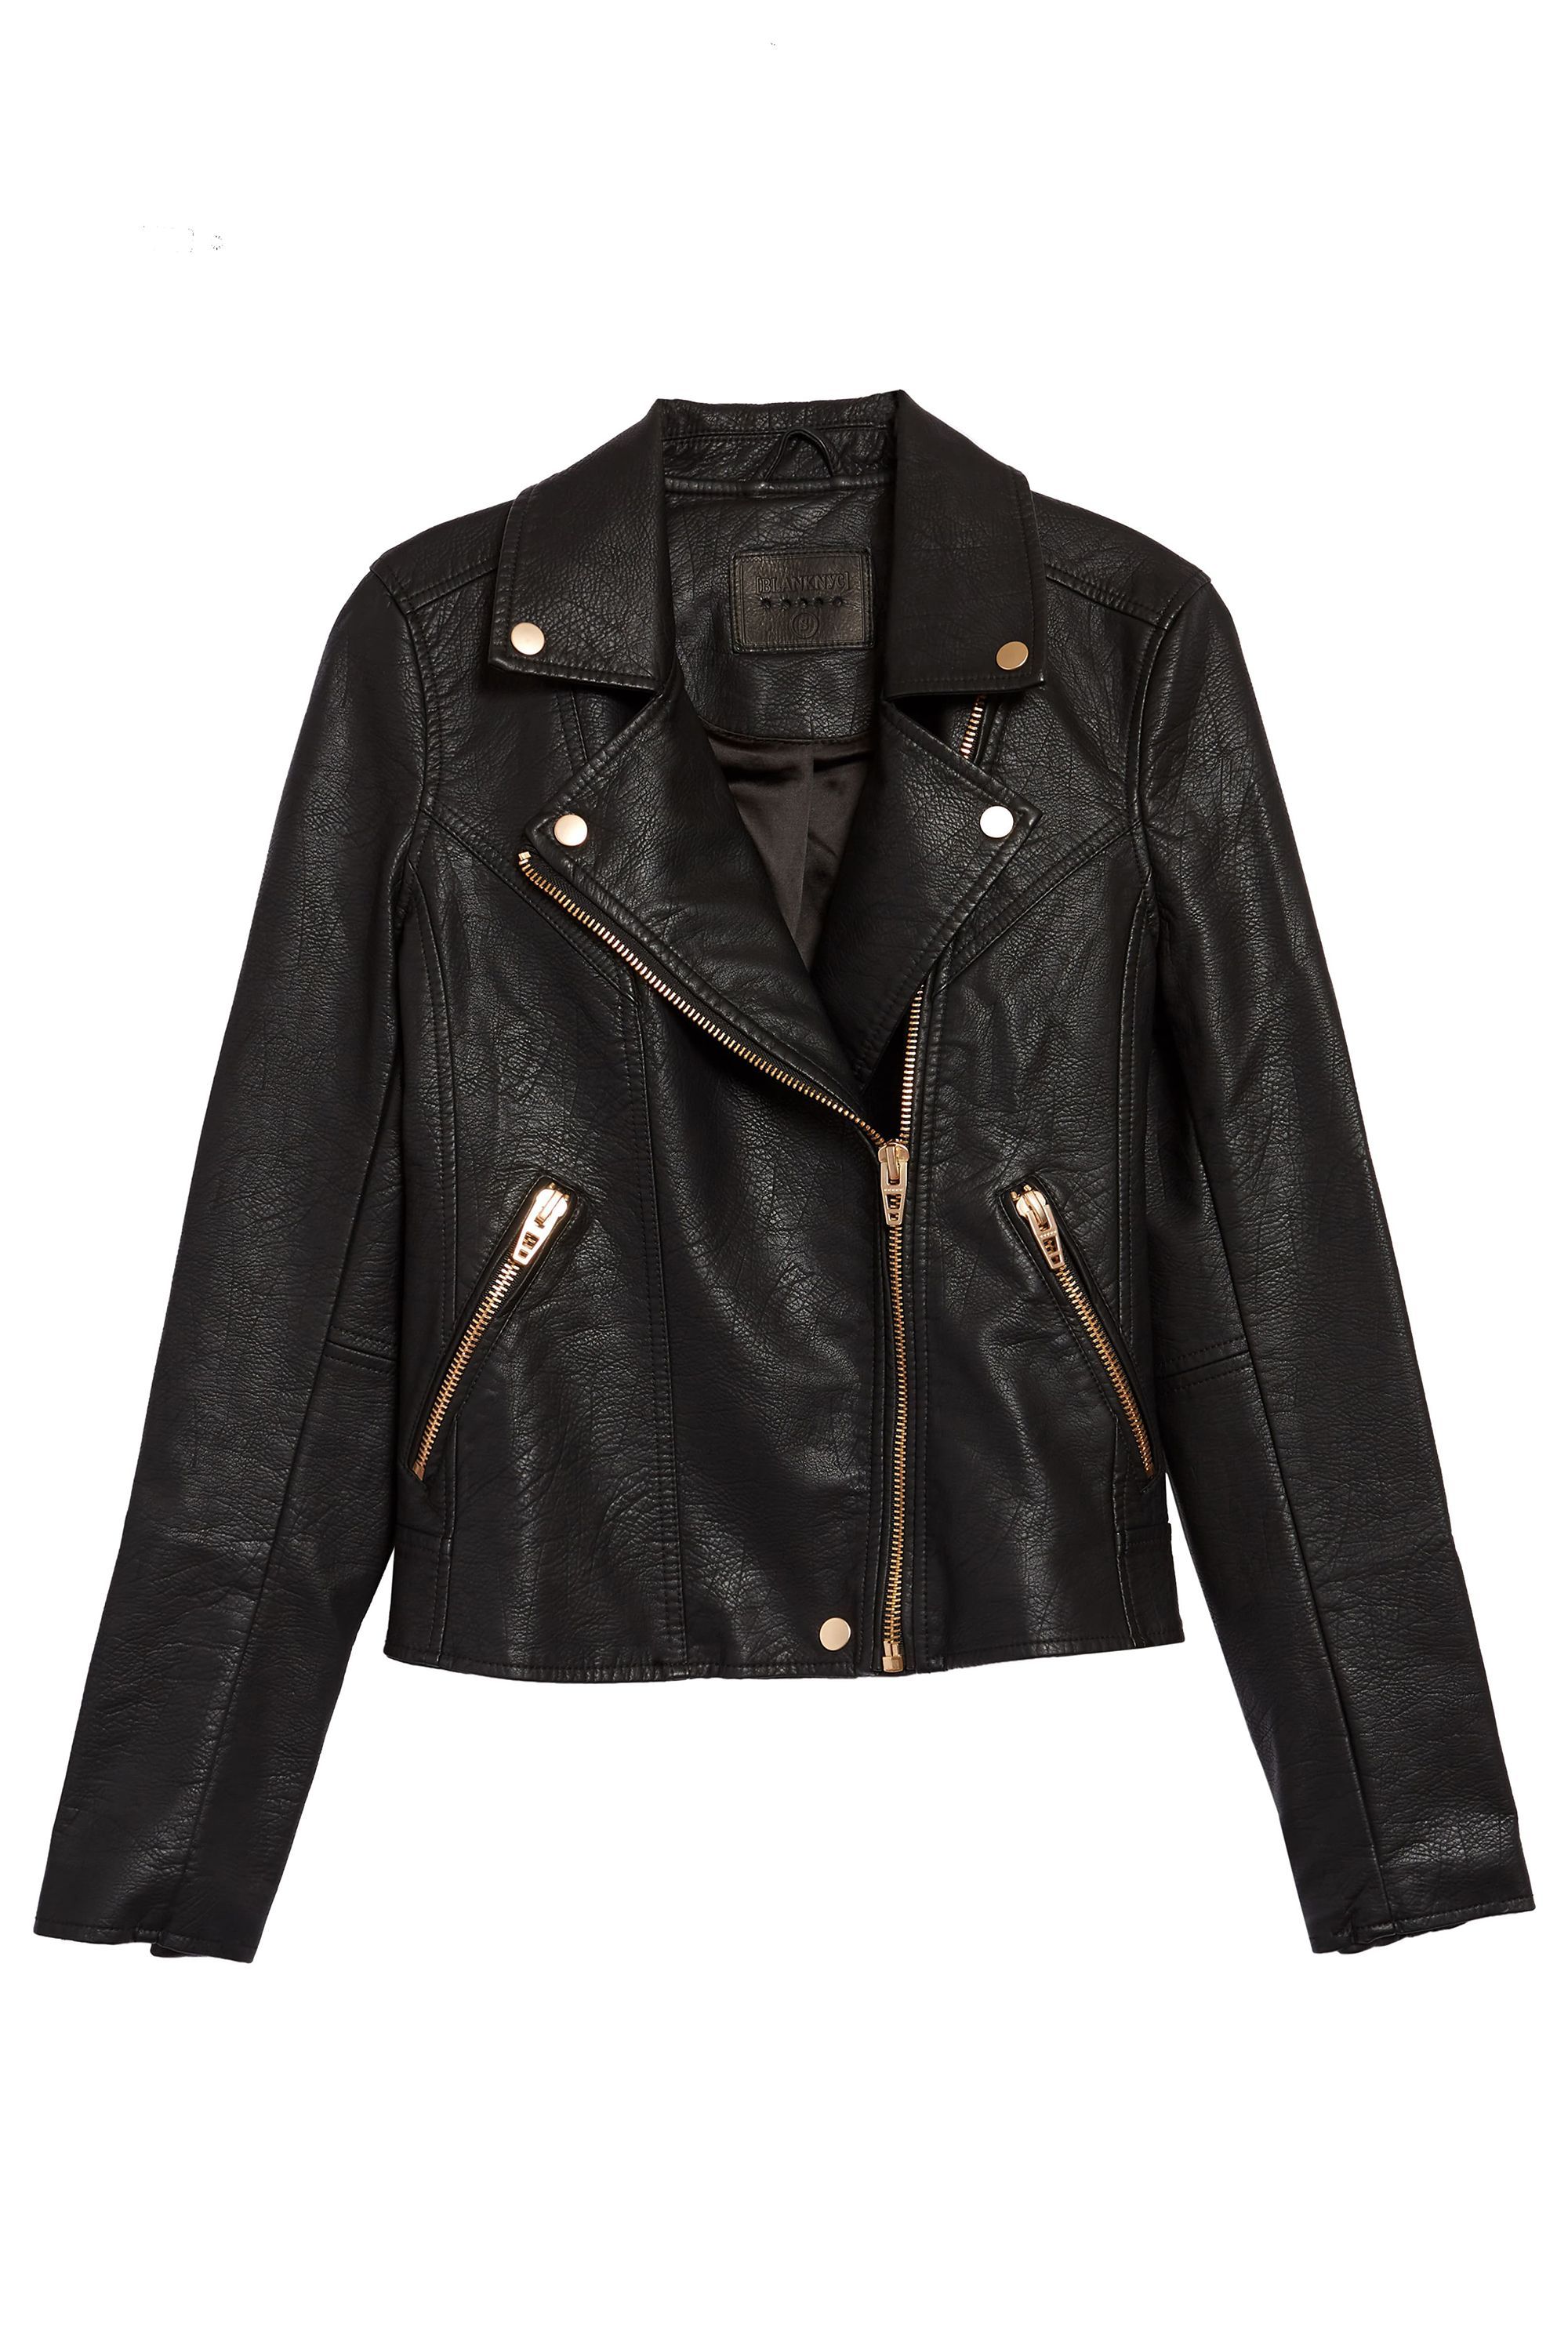 ladies black leather jacket size 18